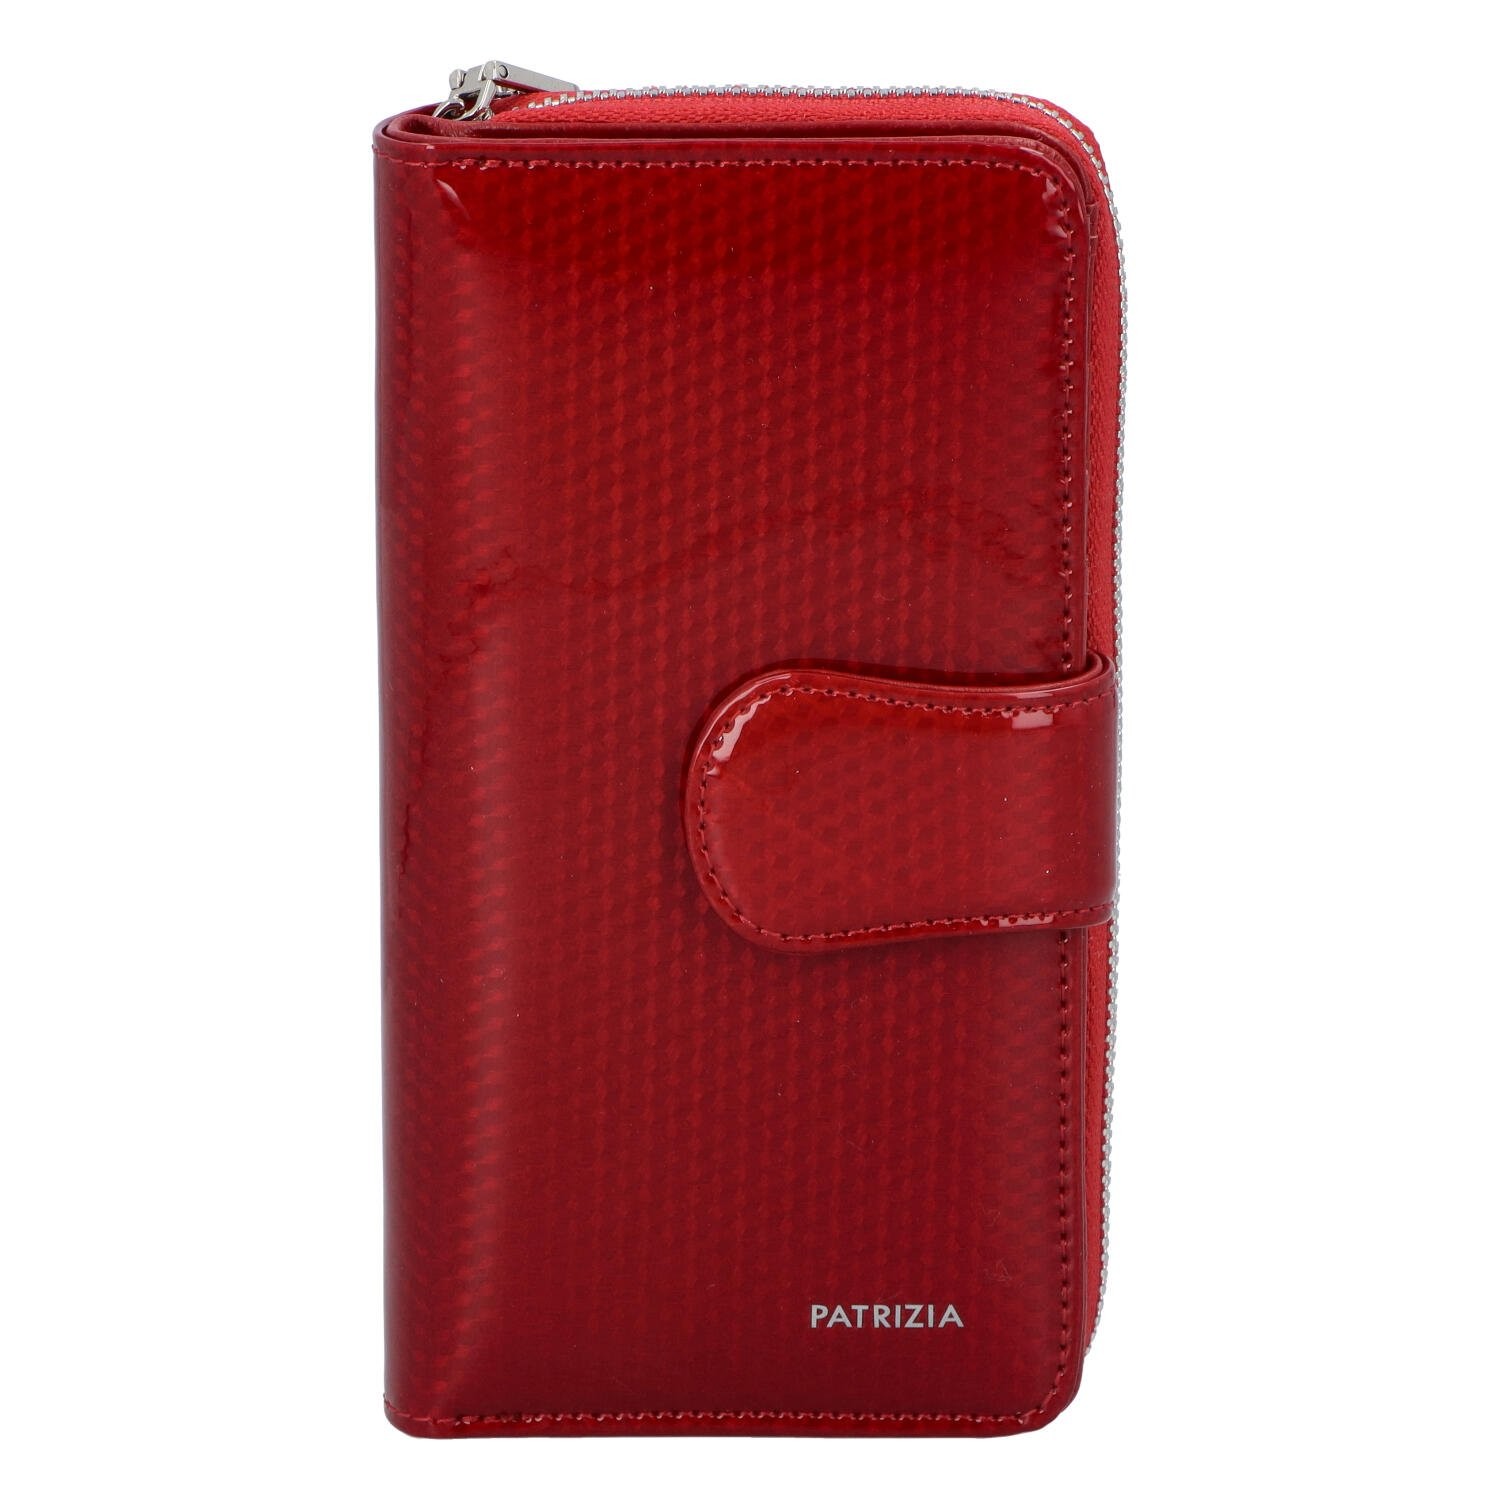 Dámská kožená peněženka červená - Patrizia Natasha červená